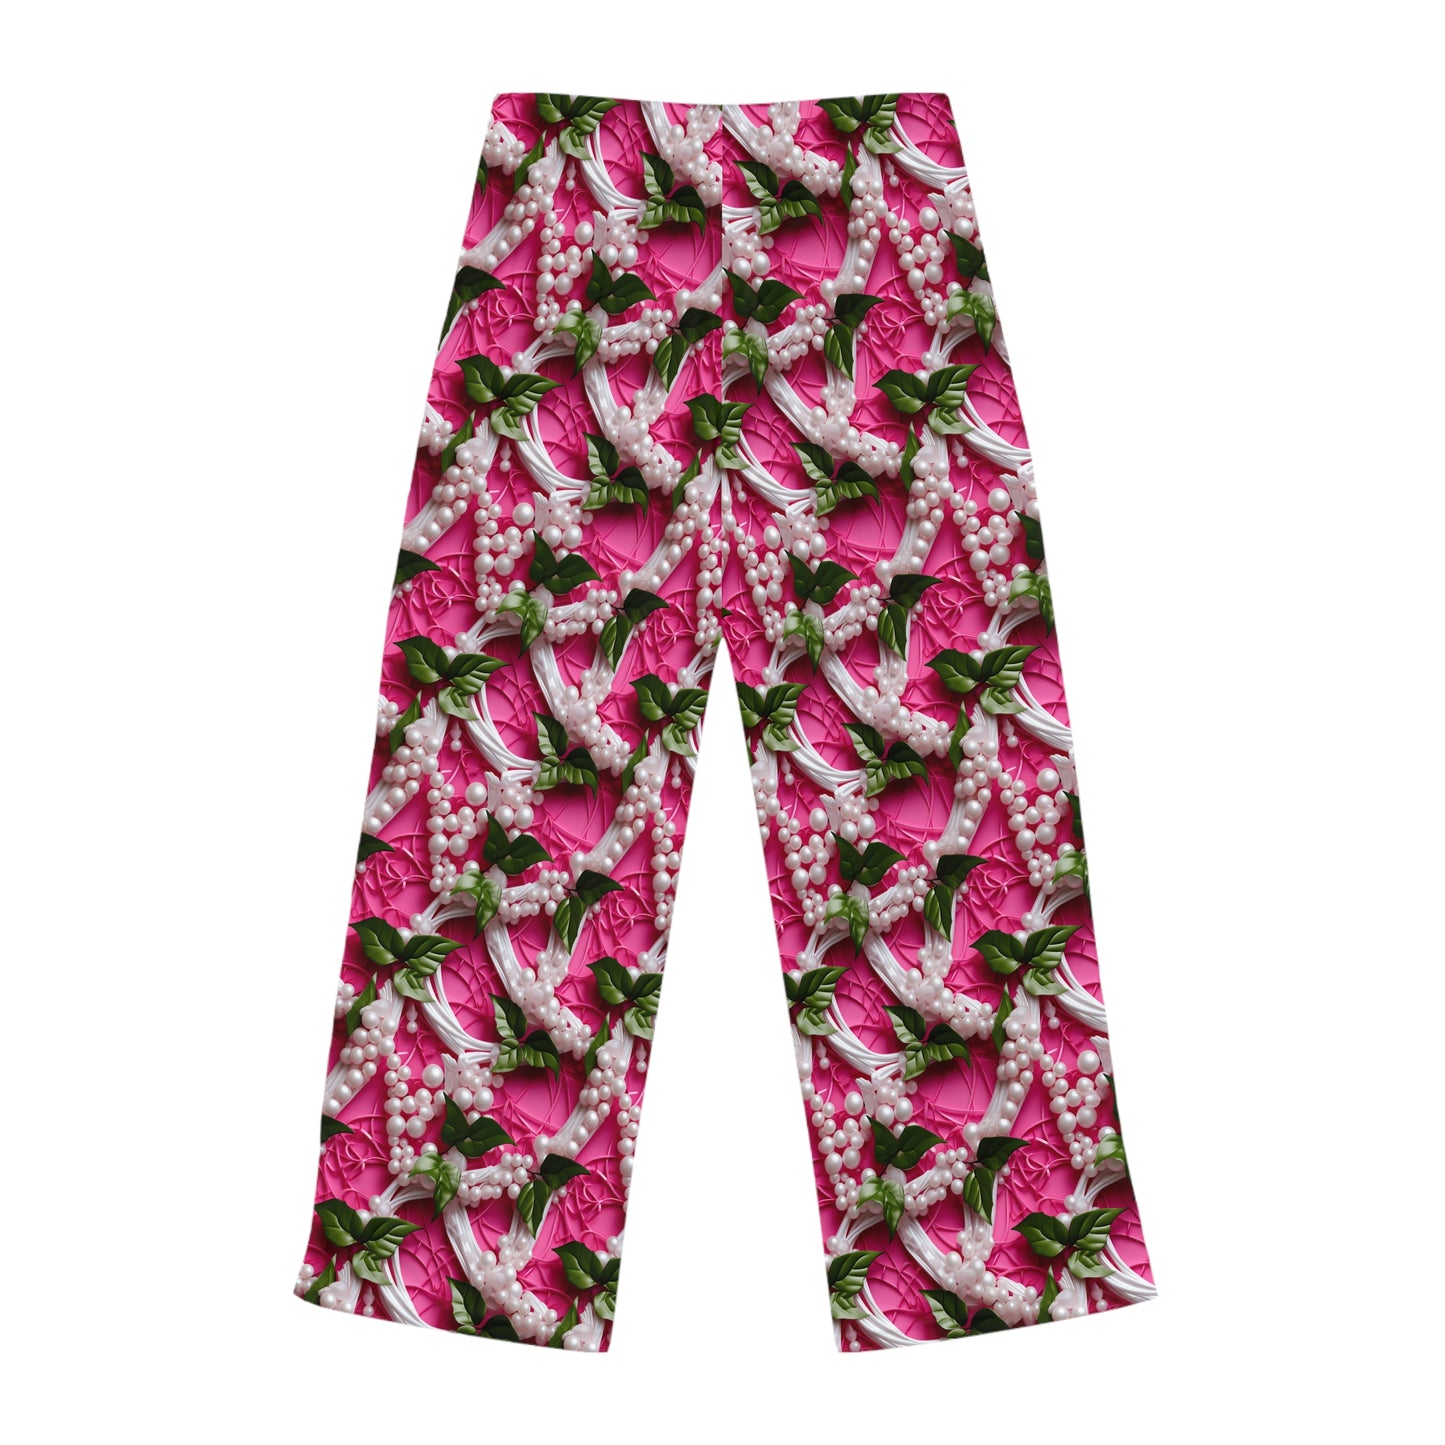 Ivy & Pearls Women's Pajama Pants